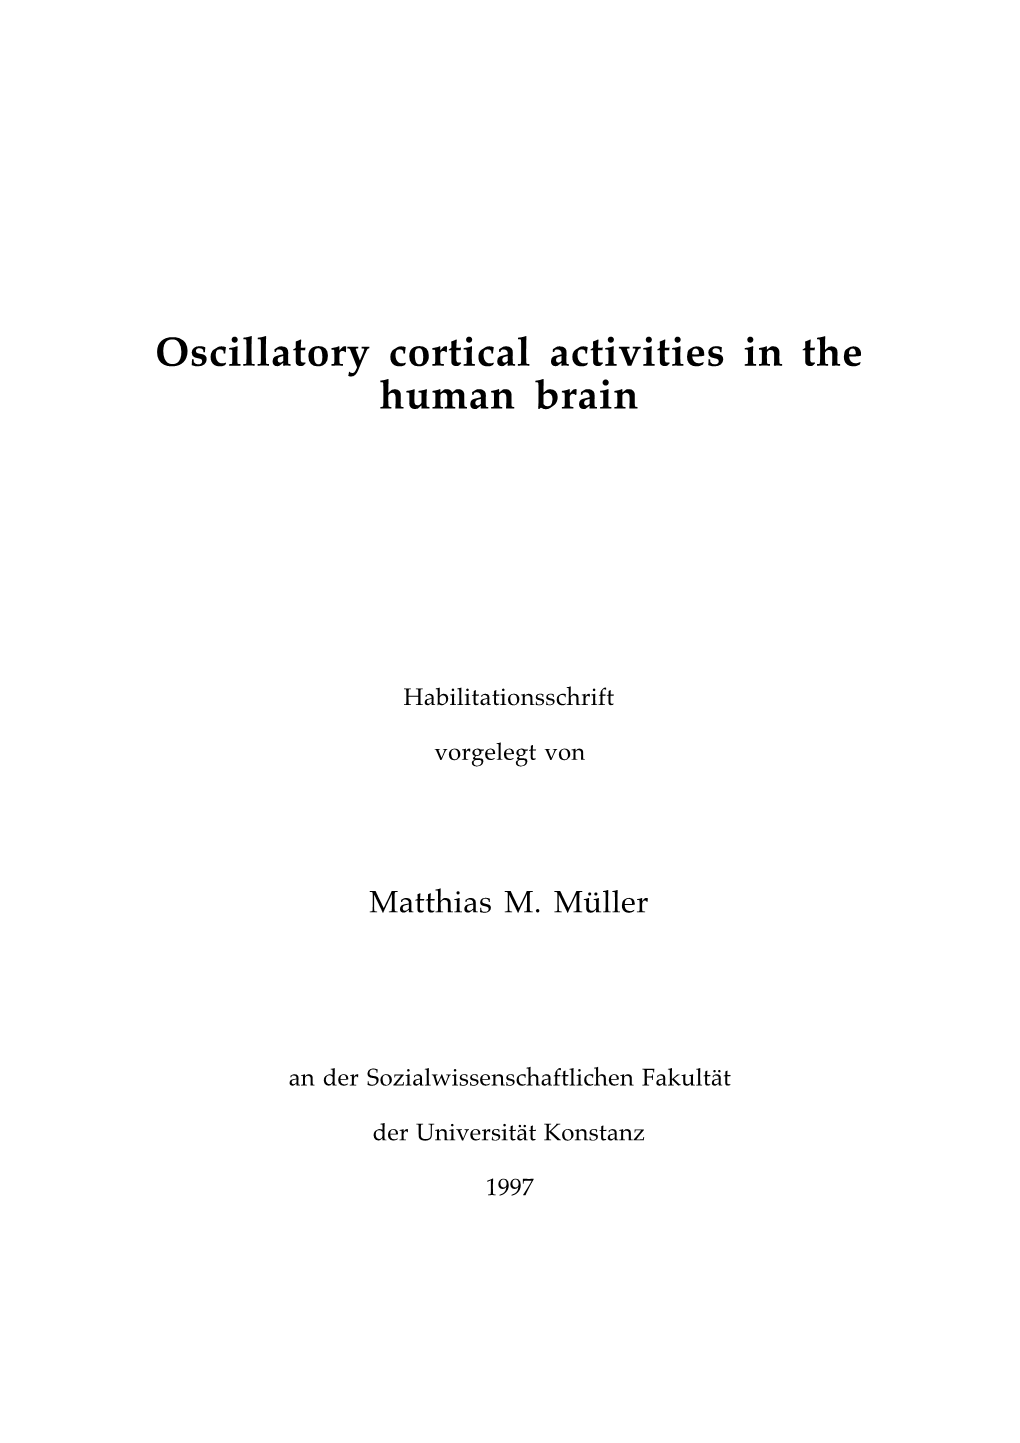 Oscillatory Cortical Activities in the Human Brain